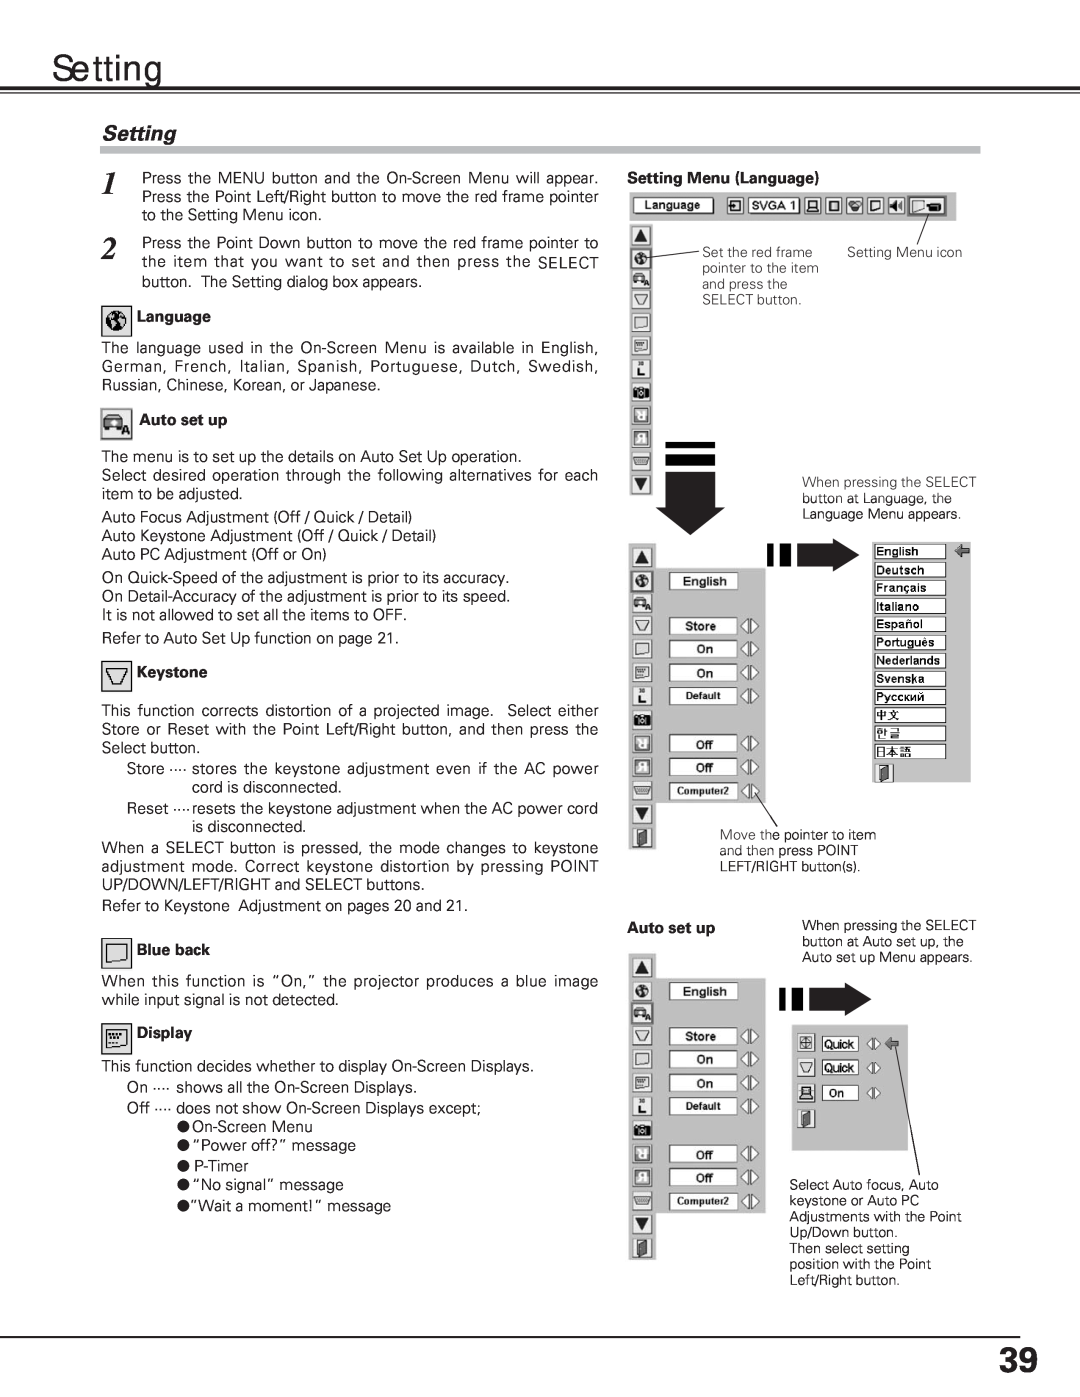 Eiki LC-XE10 instruction manual Auto set up, Keystone, Blue back, Display, Setting Menu Language 